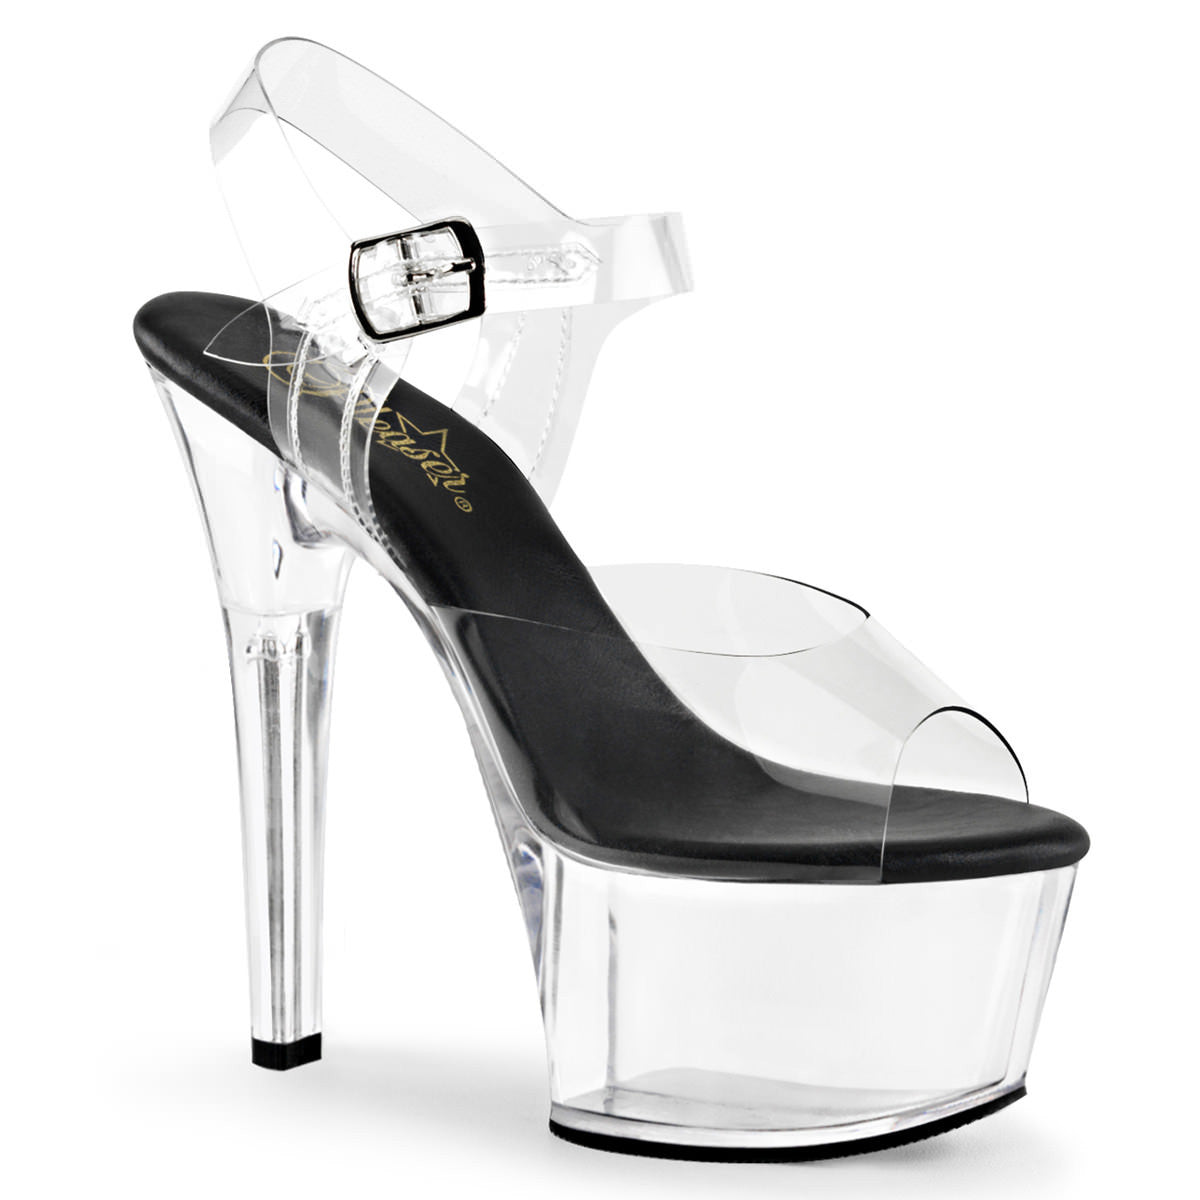 Pleaser ASPIRE-608 Clear-Black Ankle Strap Sandals With Clear Platform - Shoecup.com - 1